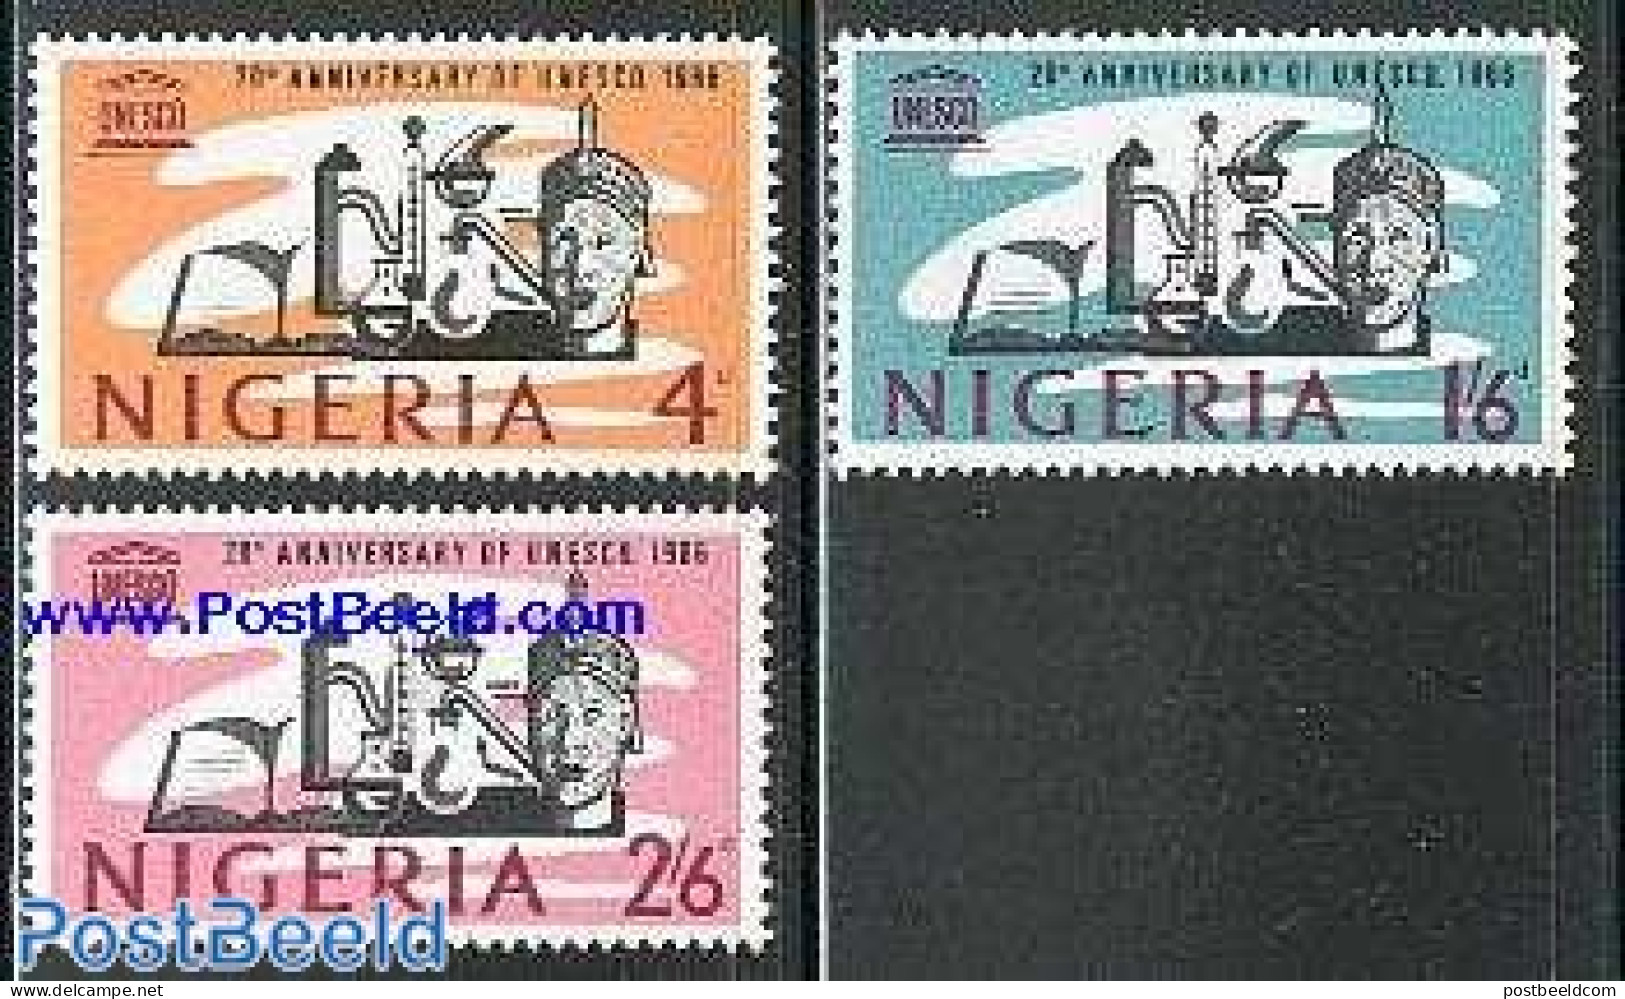 Nigeria 1966 UNESCO 3v, Mint NH, History - Science - Unesco - Chemistry & Chemists - Chimie